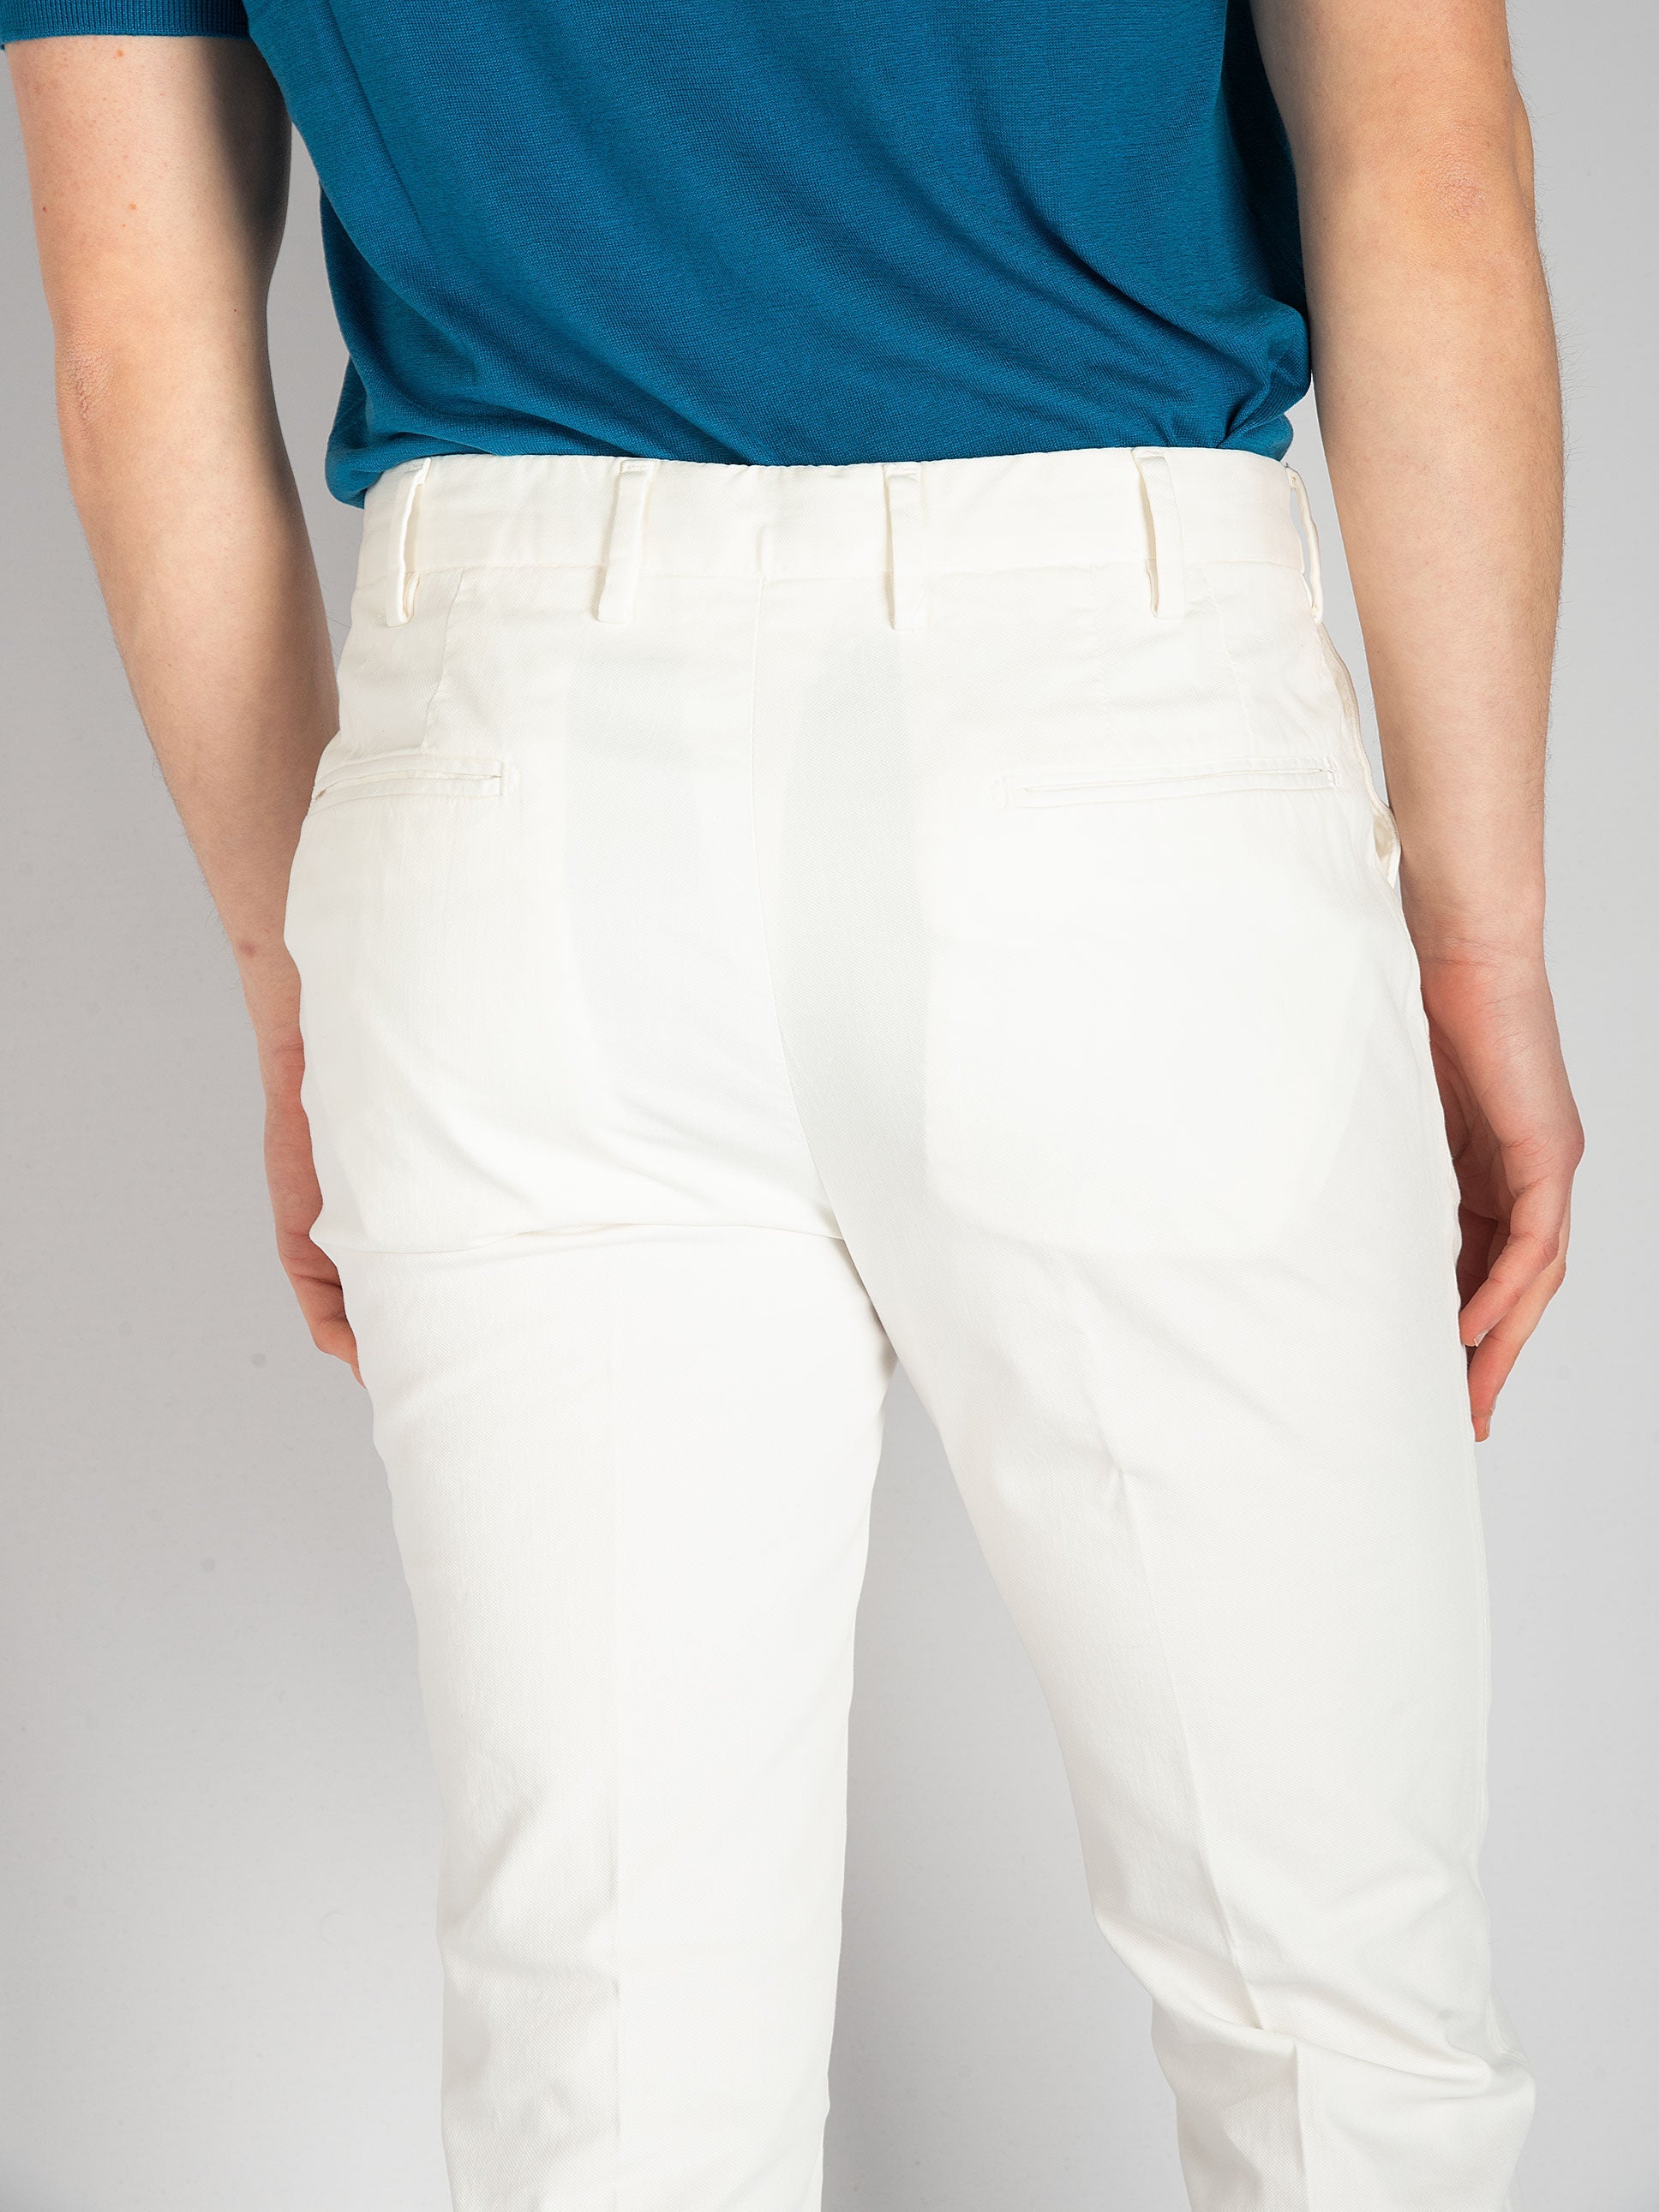 Pantalone DVR3 Cotone Seta - Bianco